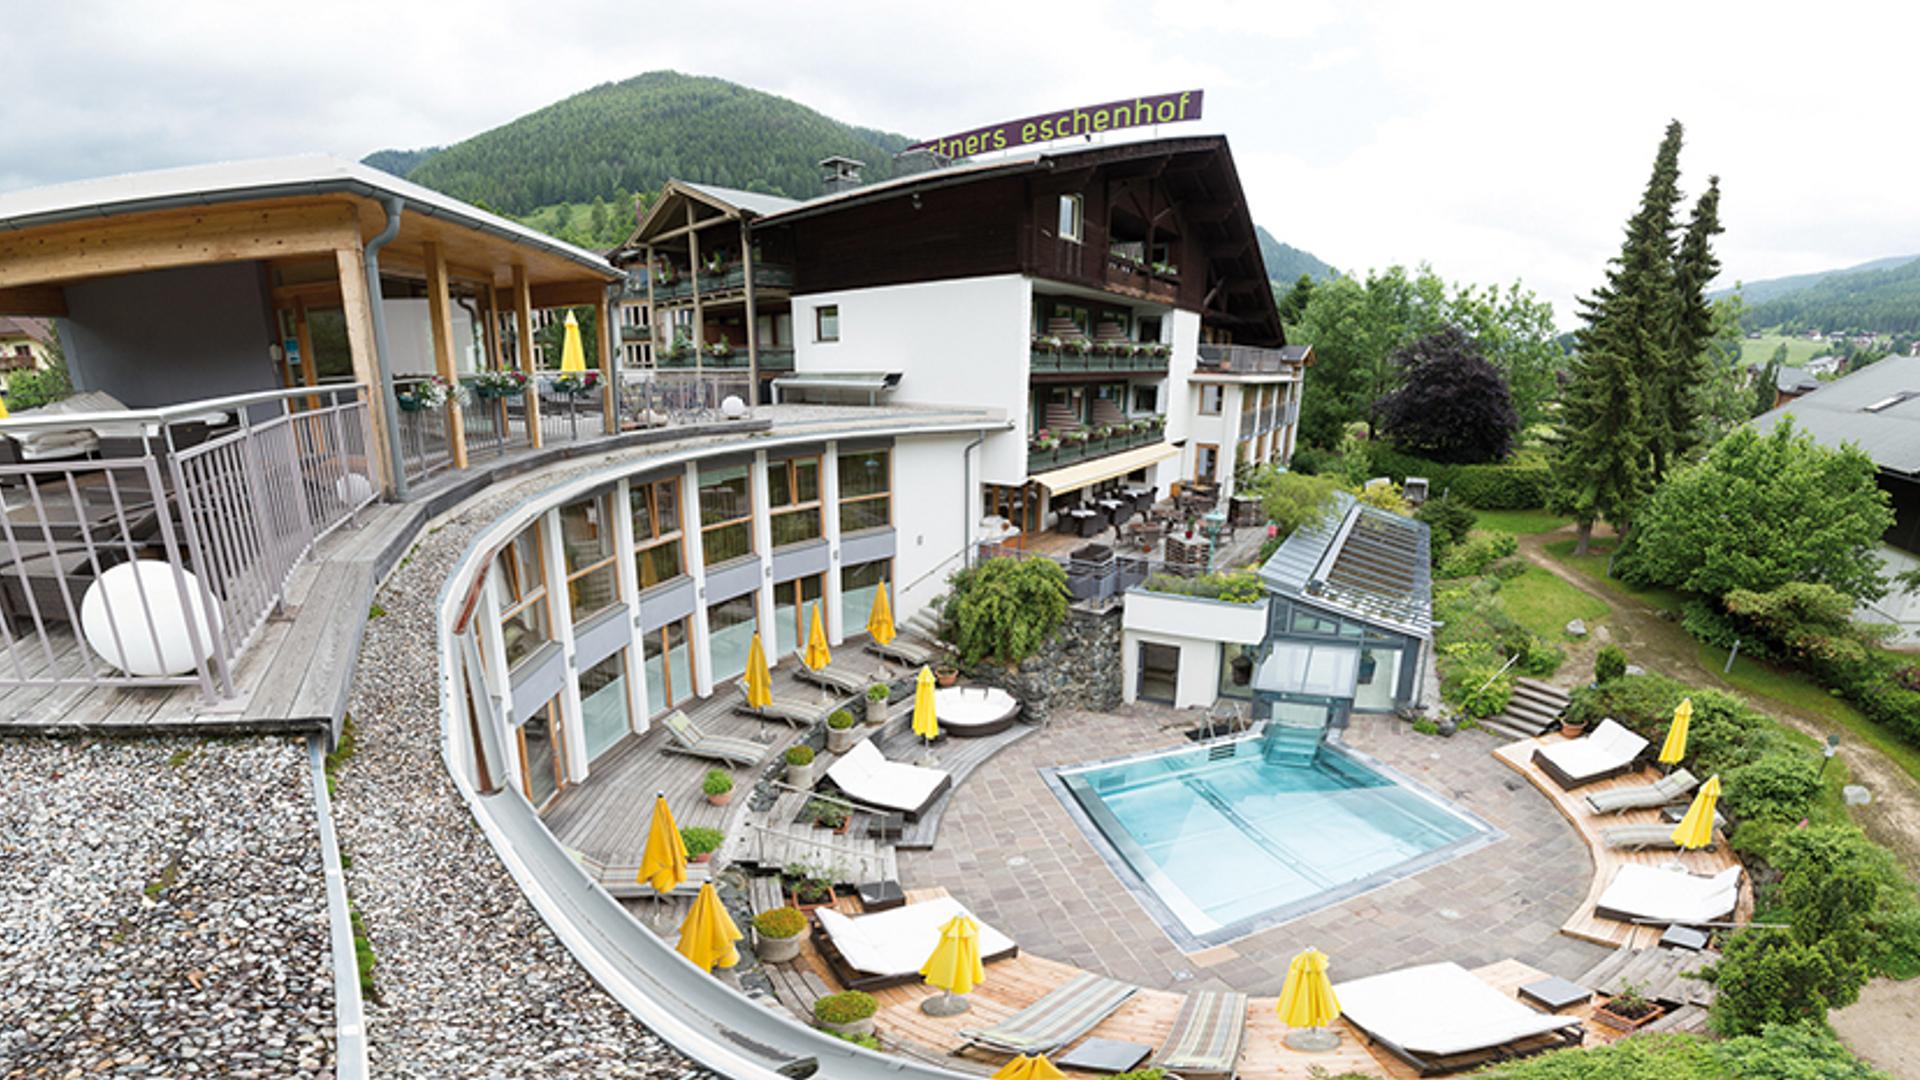 Hotel Ortners Eschenhof 4* - Alpine Slowness